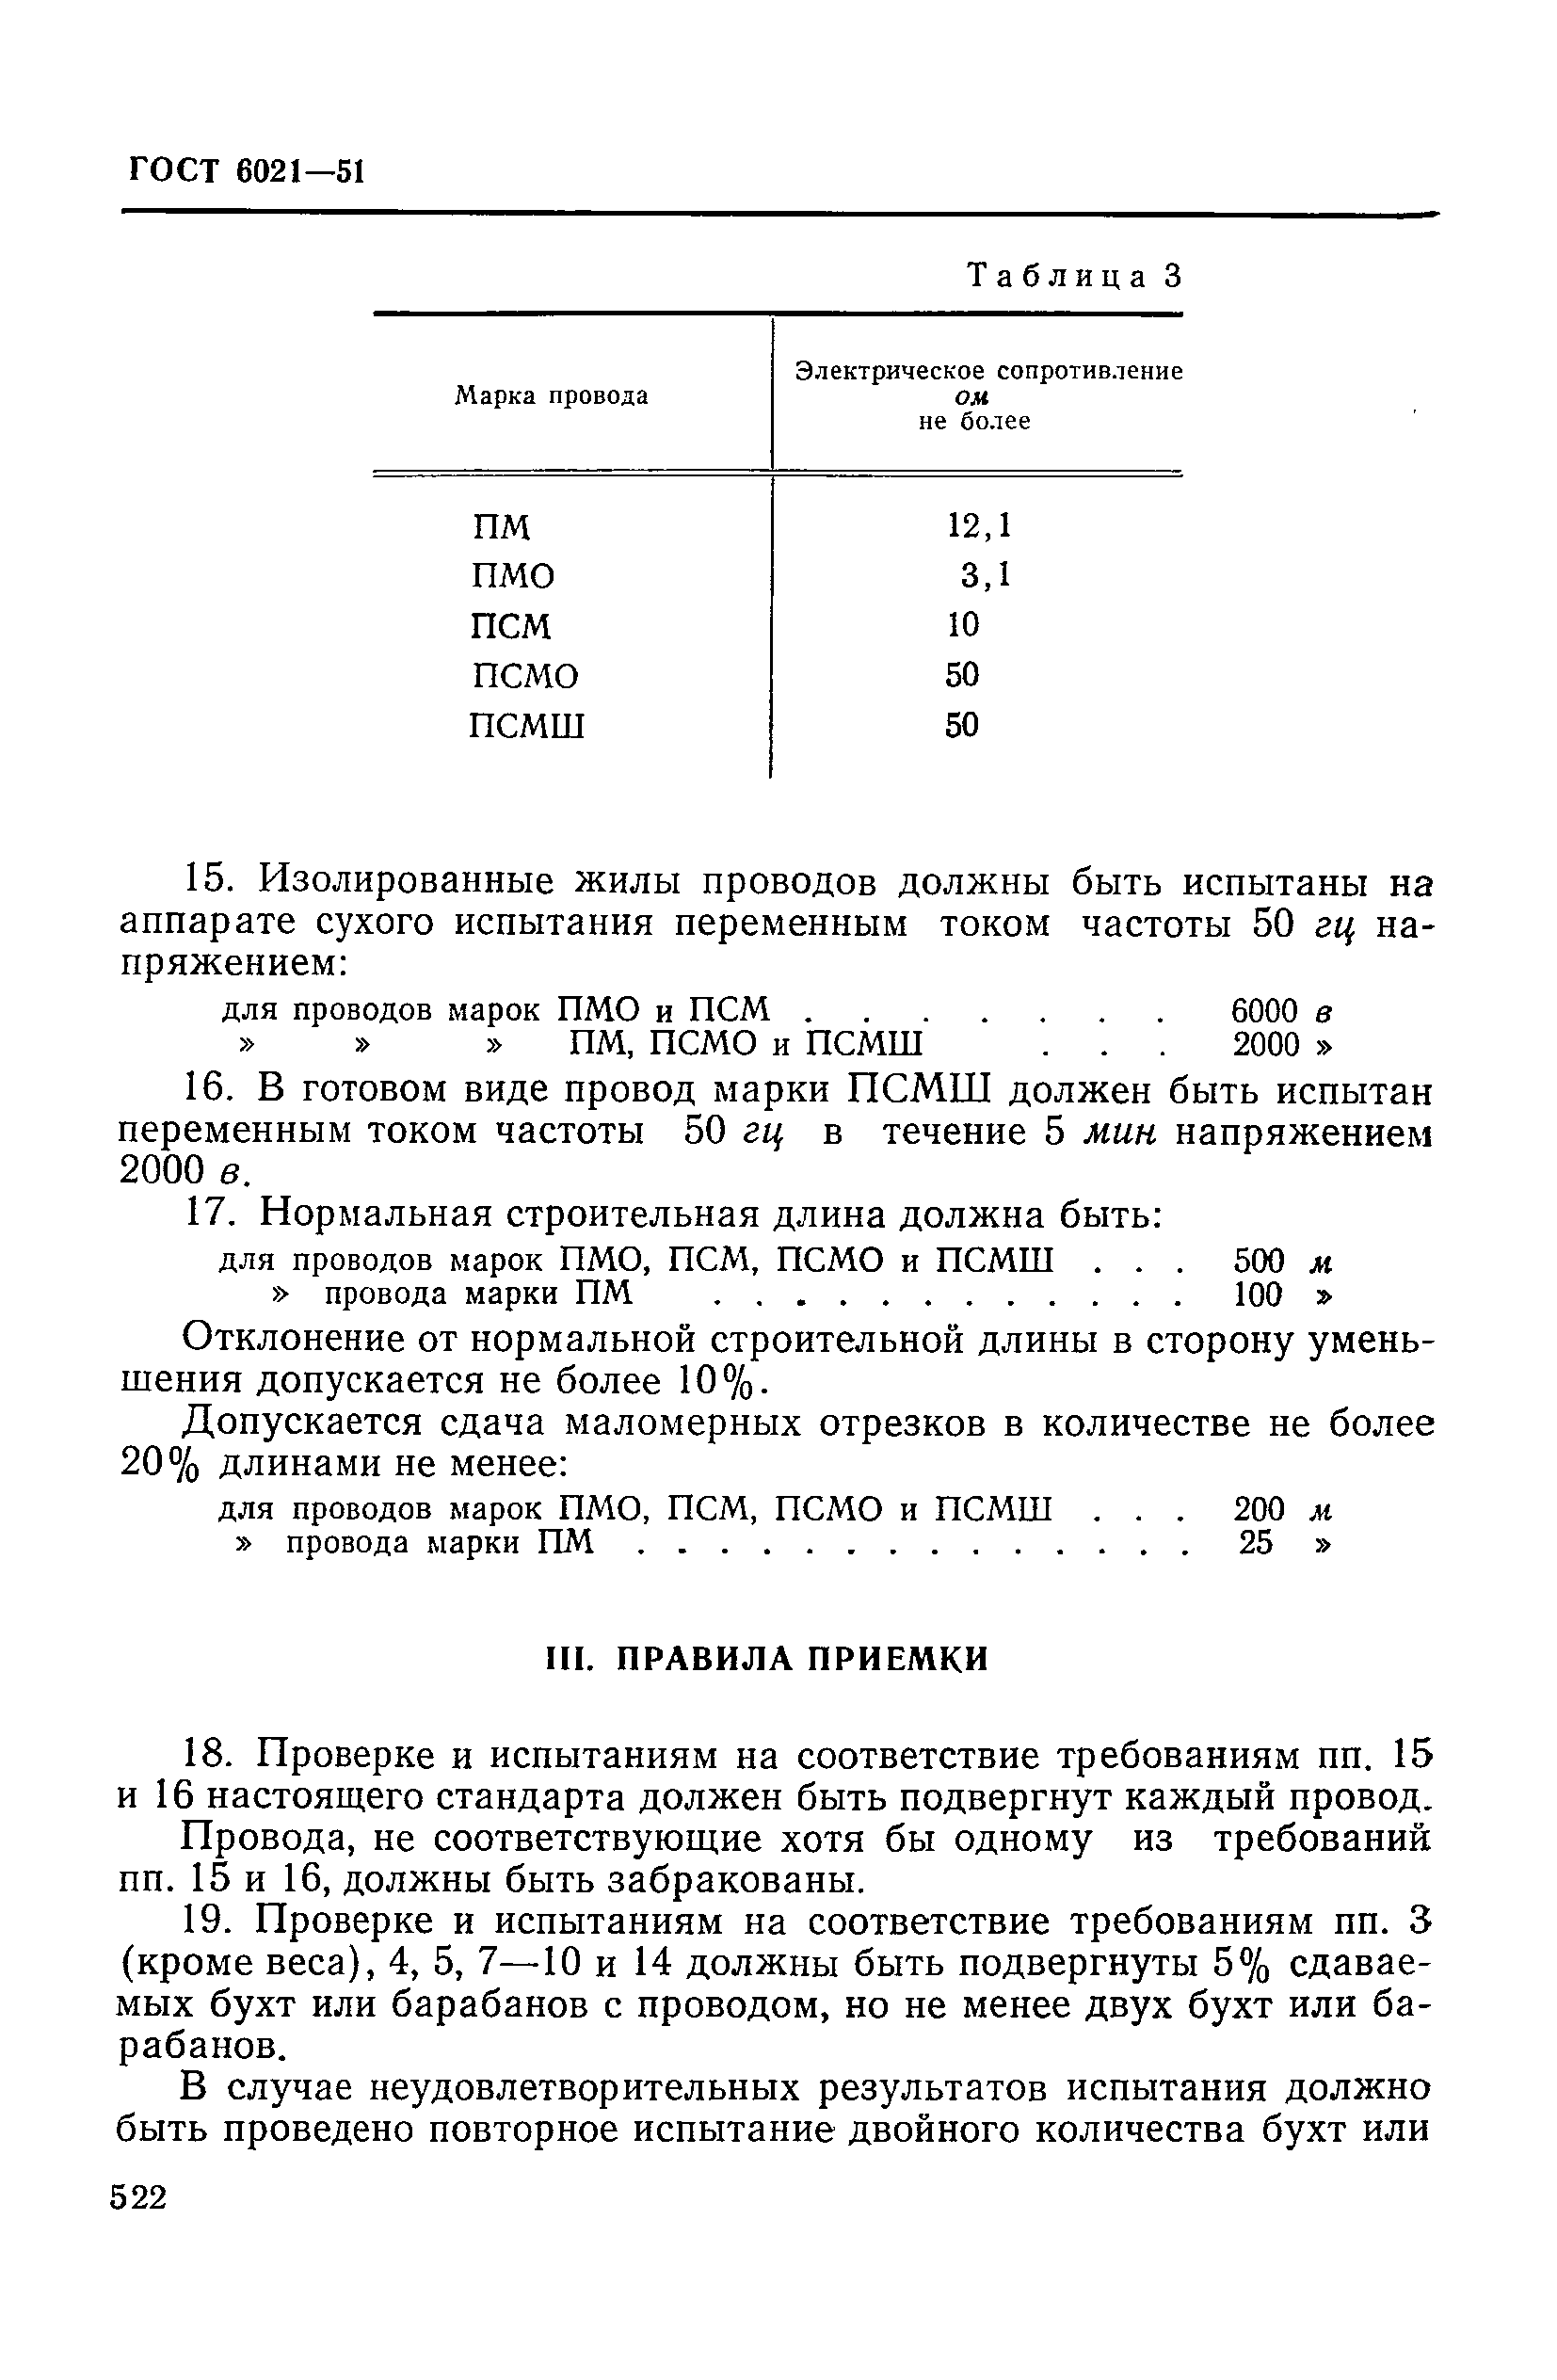 ГОСТ 6021-51